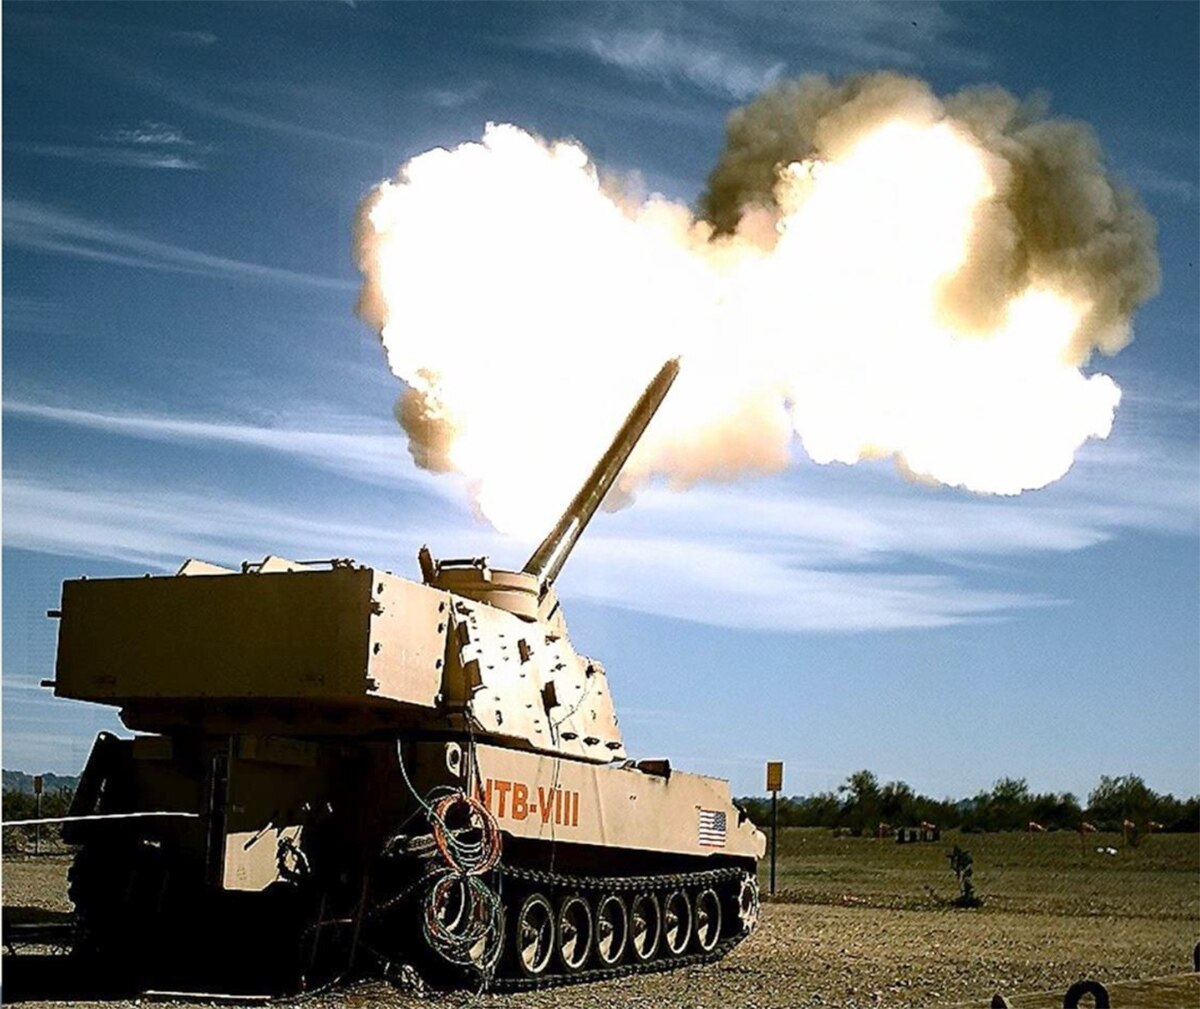 The Extended Range Artillery Projectile program (ERCA)